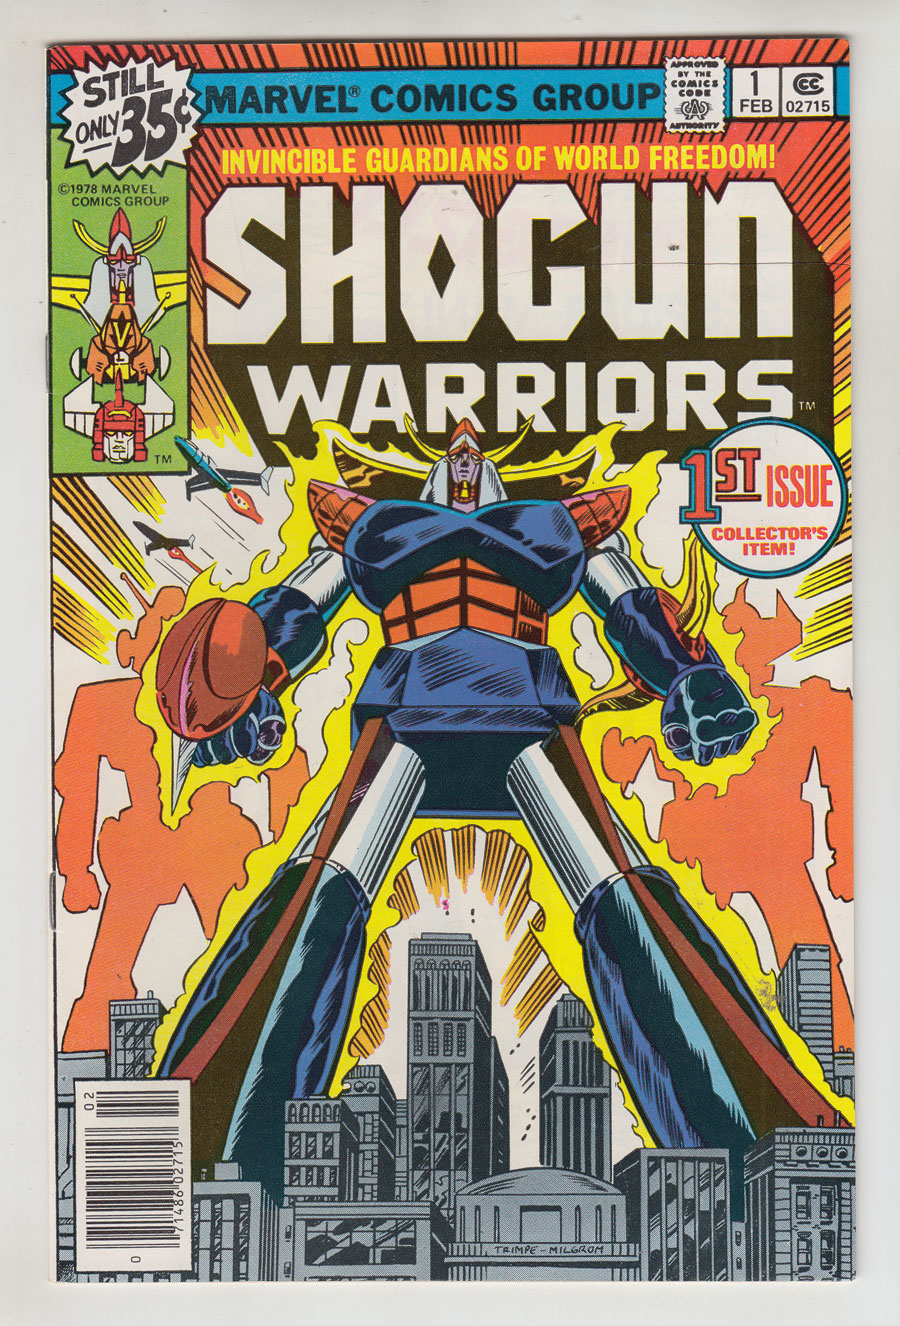 Shogun warriors #1